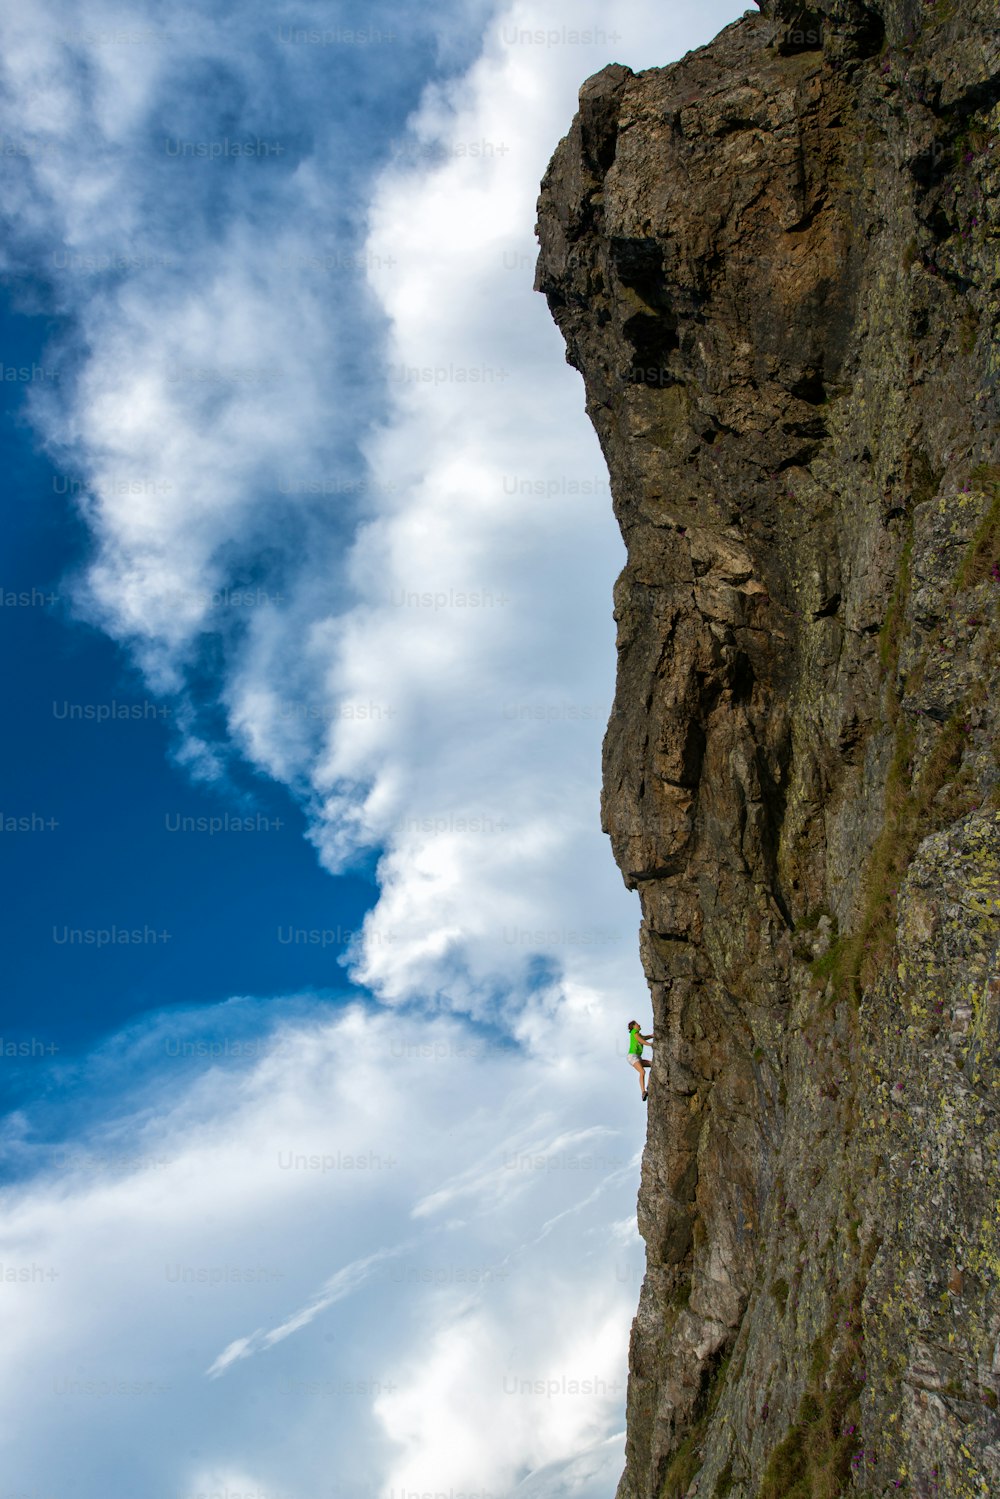 Girl climbing free solo.